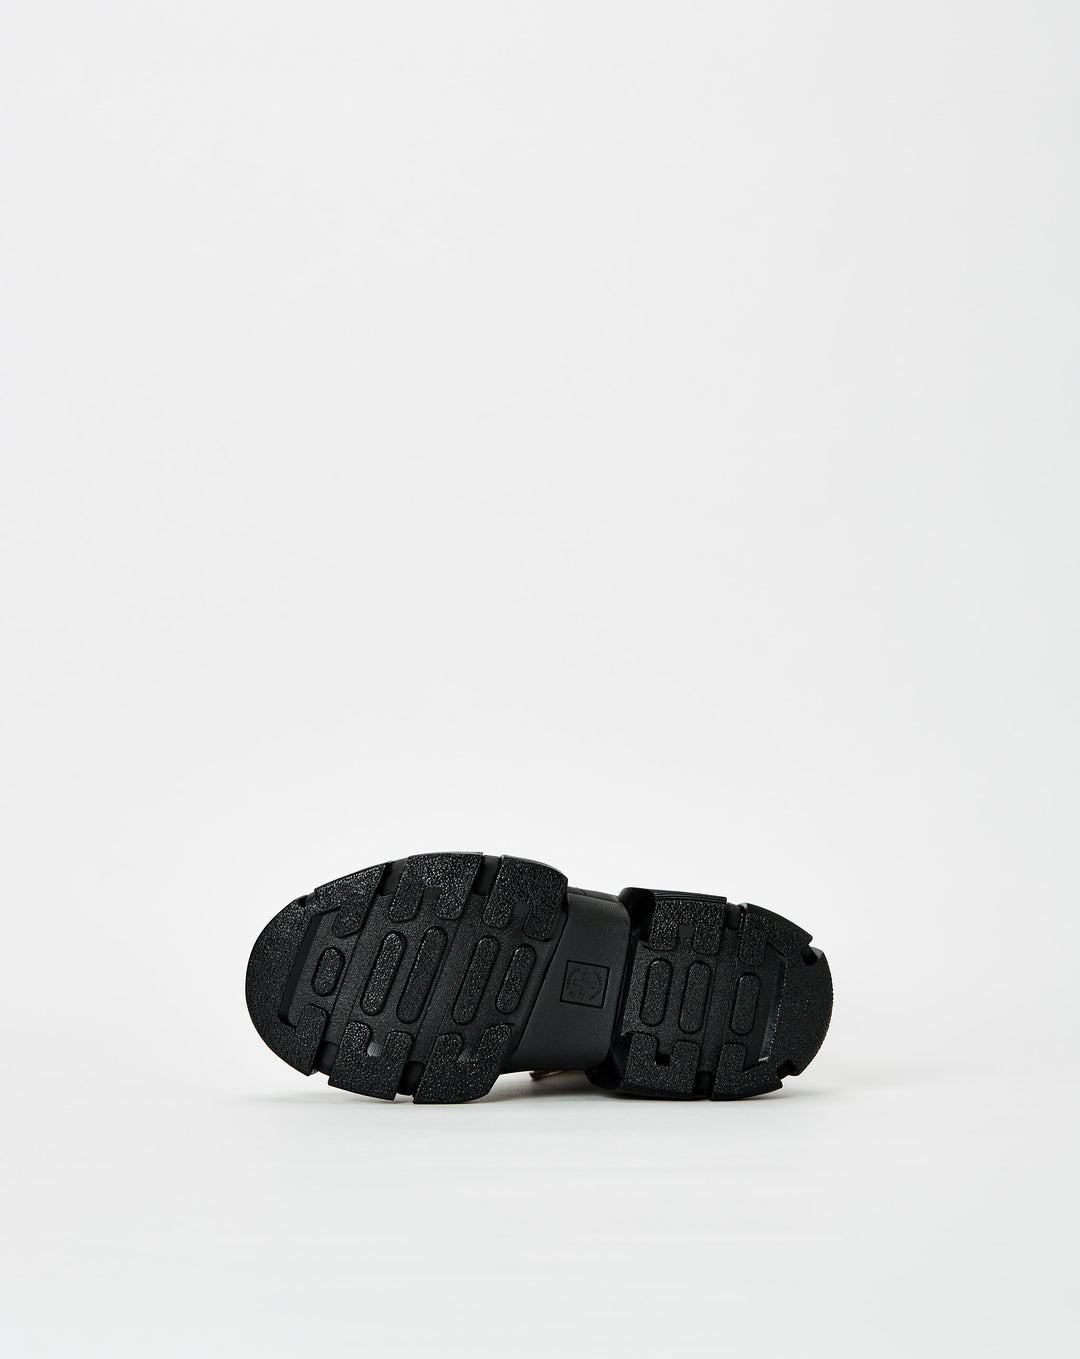 Martens Chaussures 1461 Bex EN Martens Men's 1461 Mono Shoe in Black Patent Lamper  - Cheap Erlebniswelt-fliegenfischen Jordan outlet